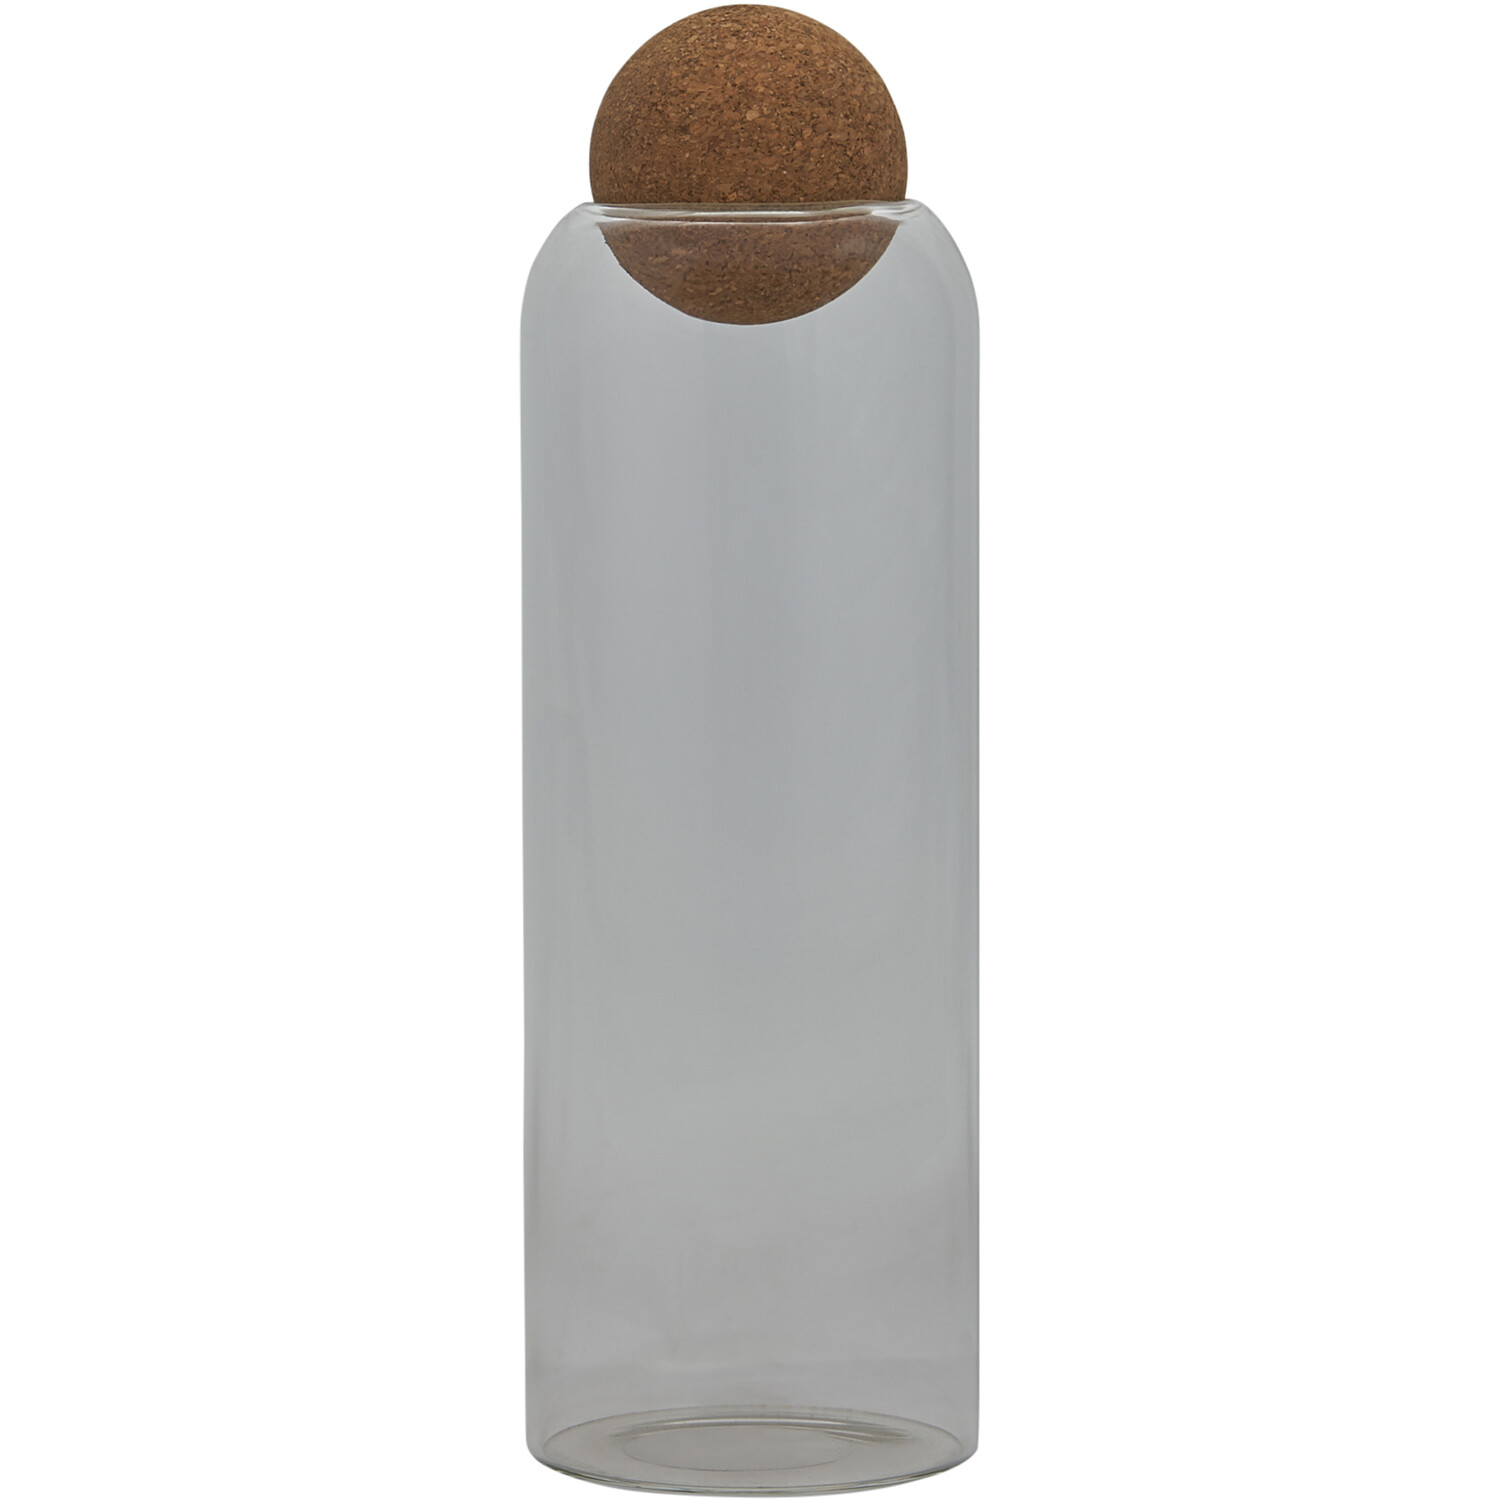 Storage Jar with Cork Lid - Clear / 1.3l Image 1